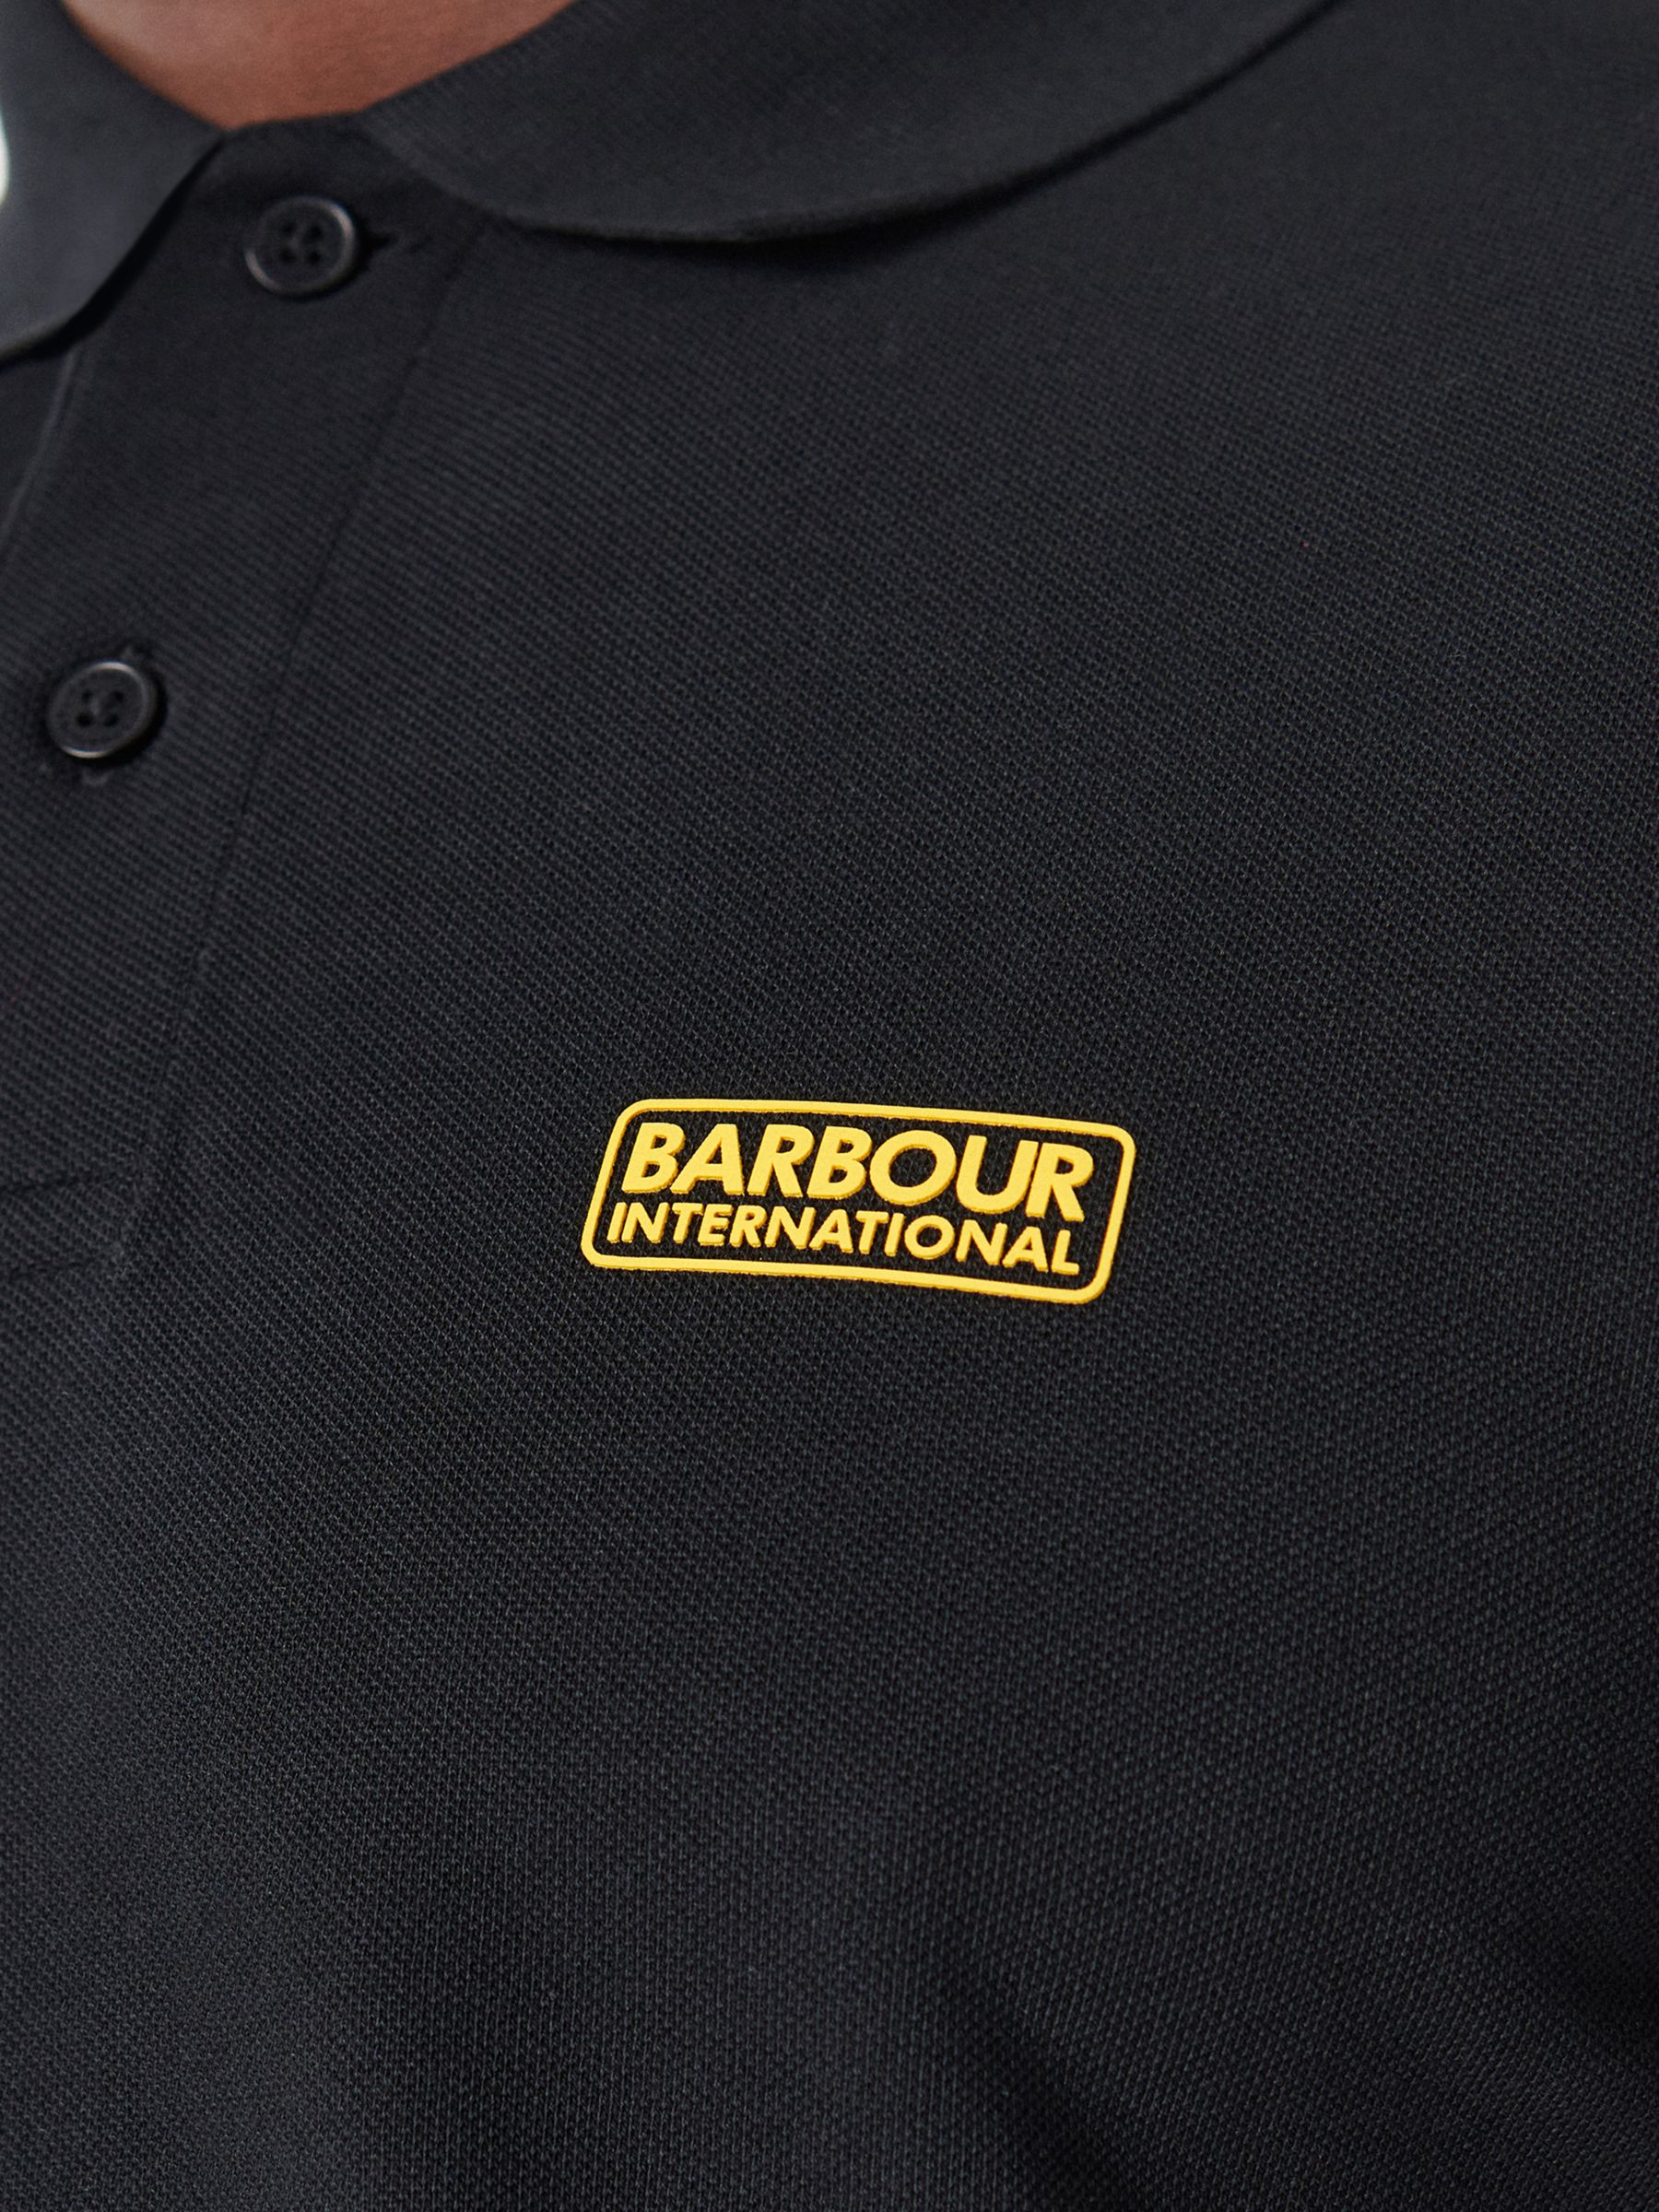 Barbour International Essential Polo Shirt, Black at John Lewis & Partners